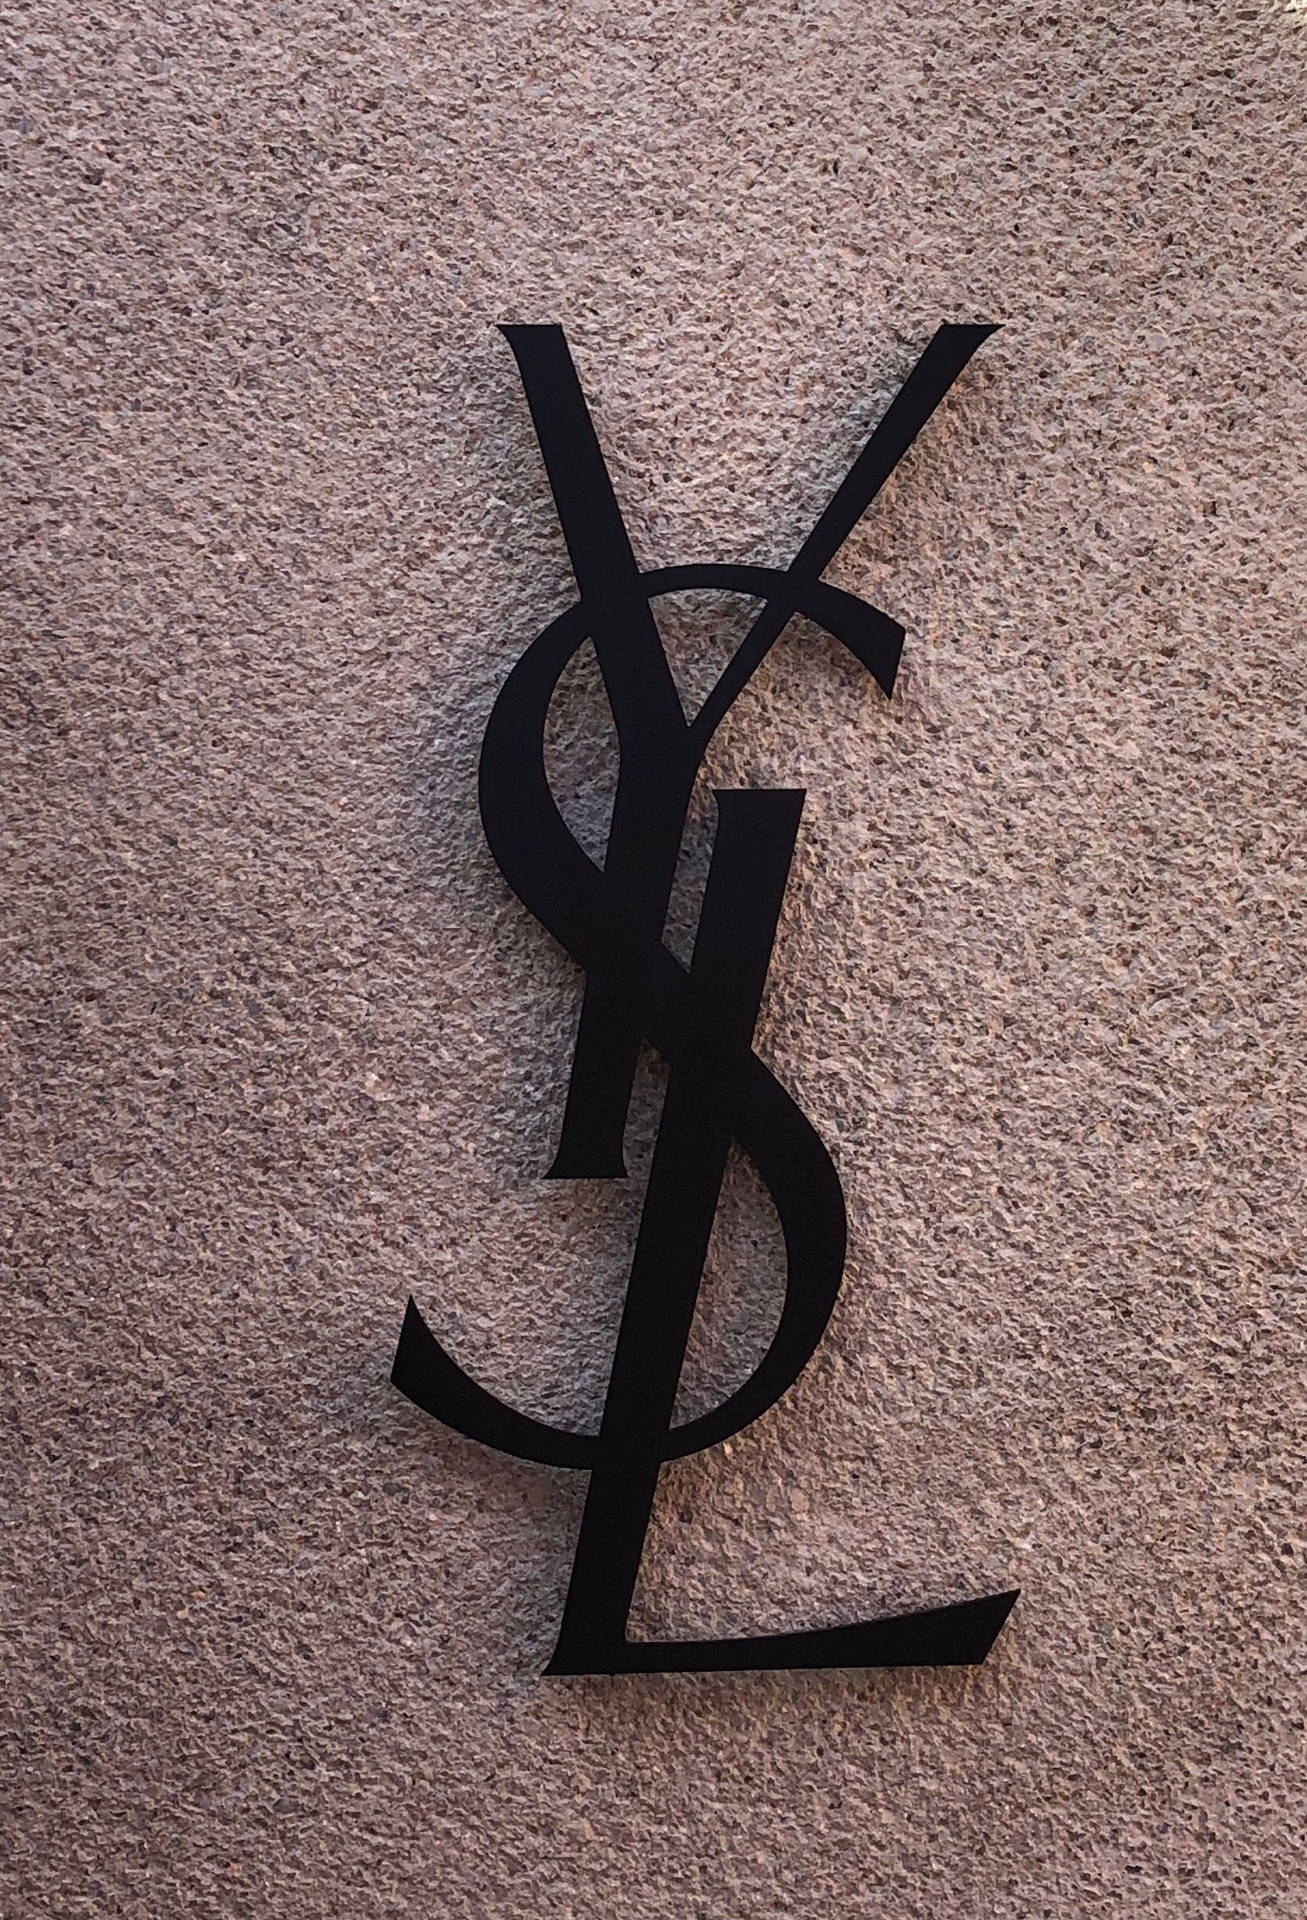 Logonegro De Ysl En La Pared. Fondo de pantalla